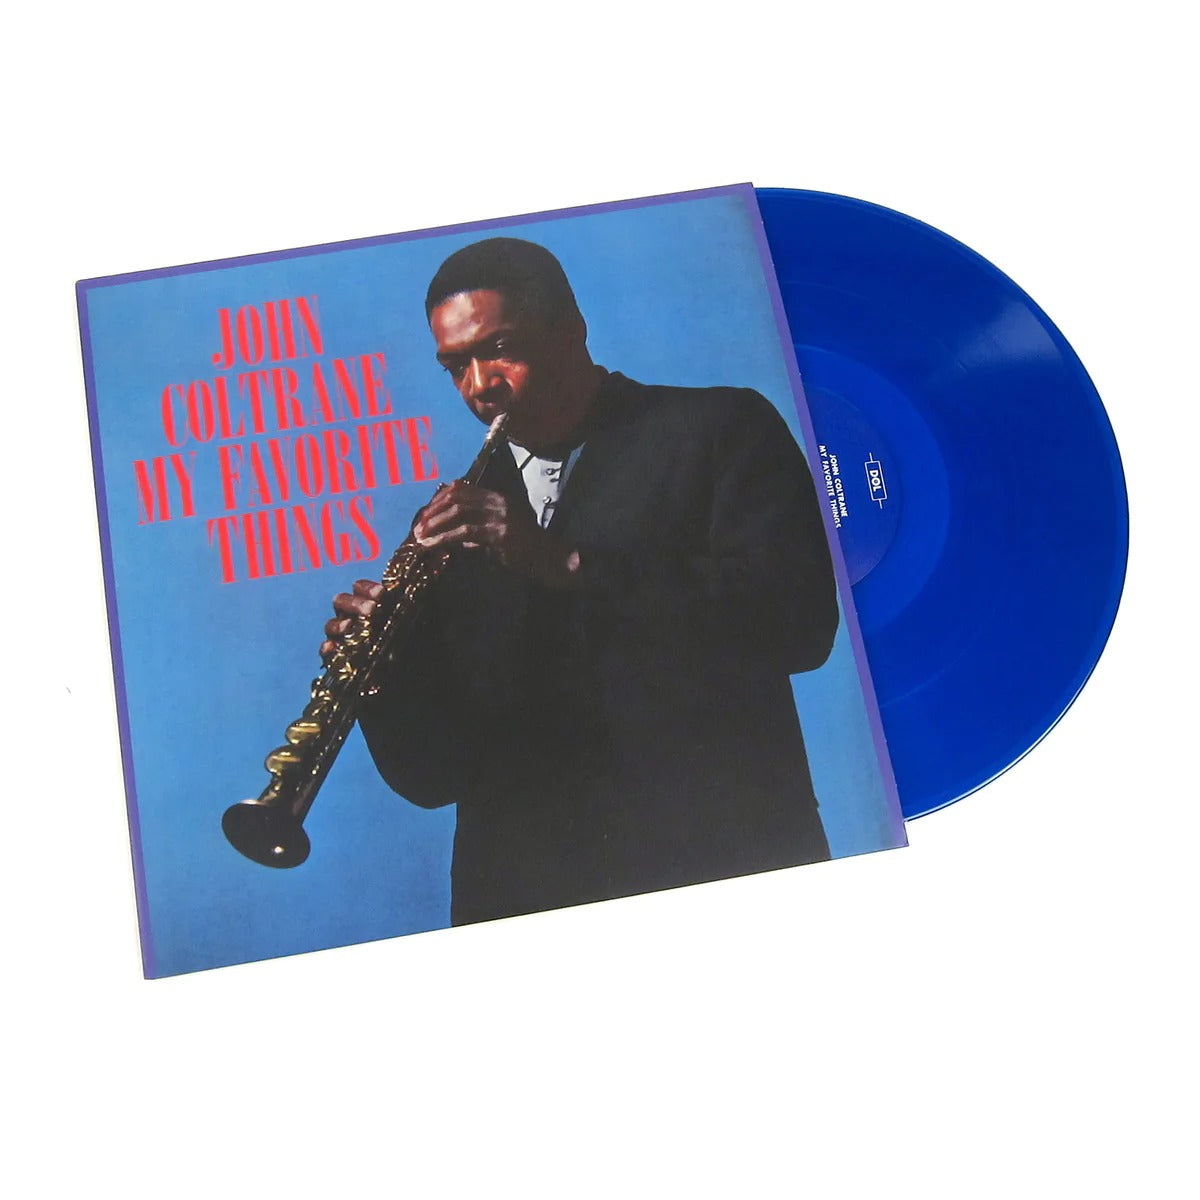 John Coltrane My Favorite Things Lp 180g Colored Vinyl